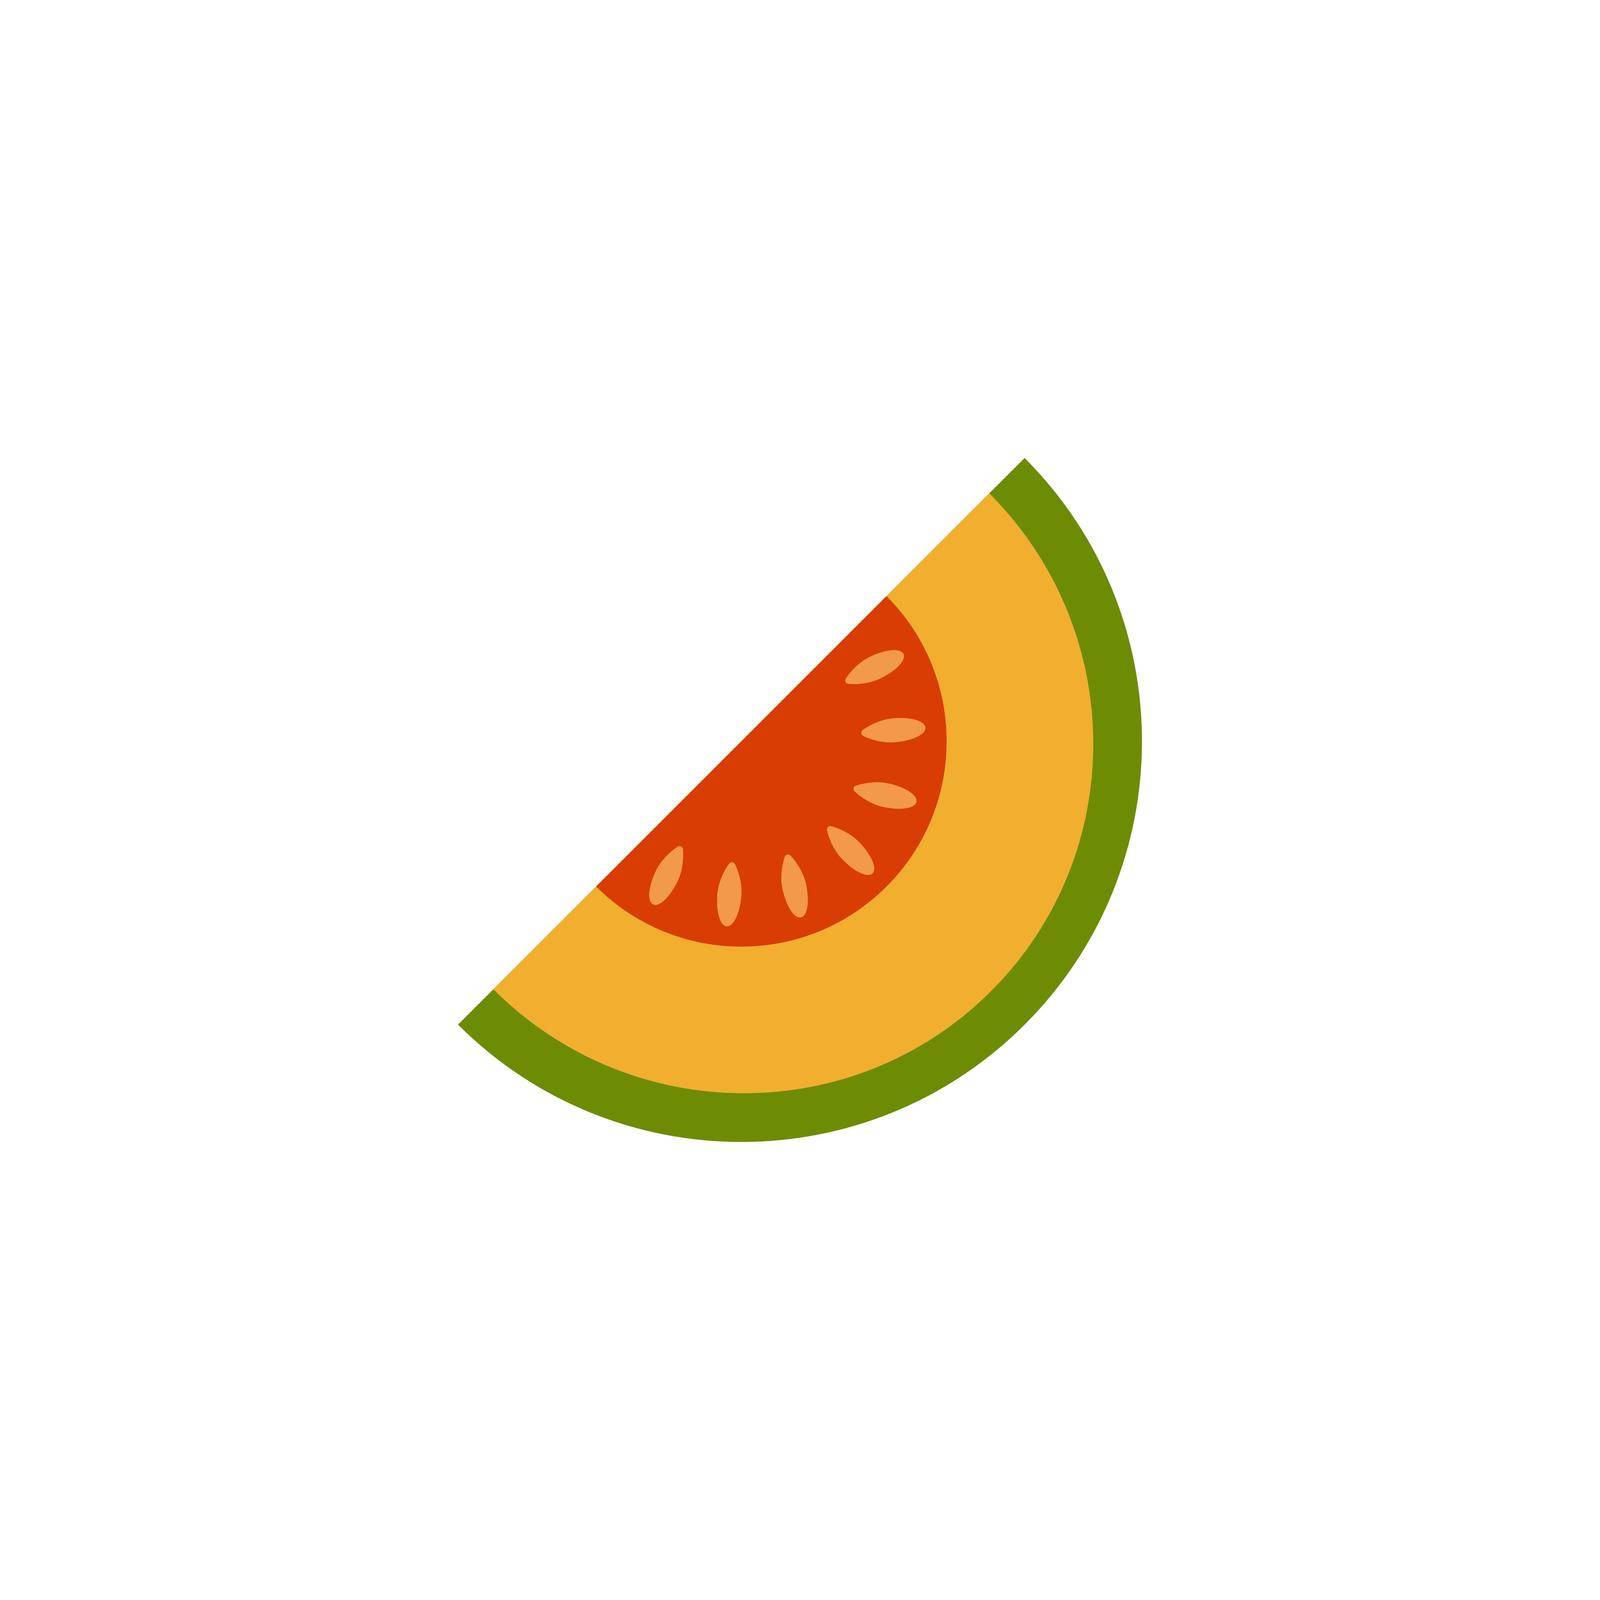 Melon logo vector. melon on white background. Half sliced melon. by juliet_summertime